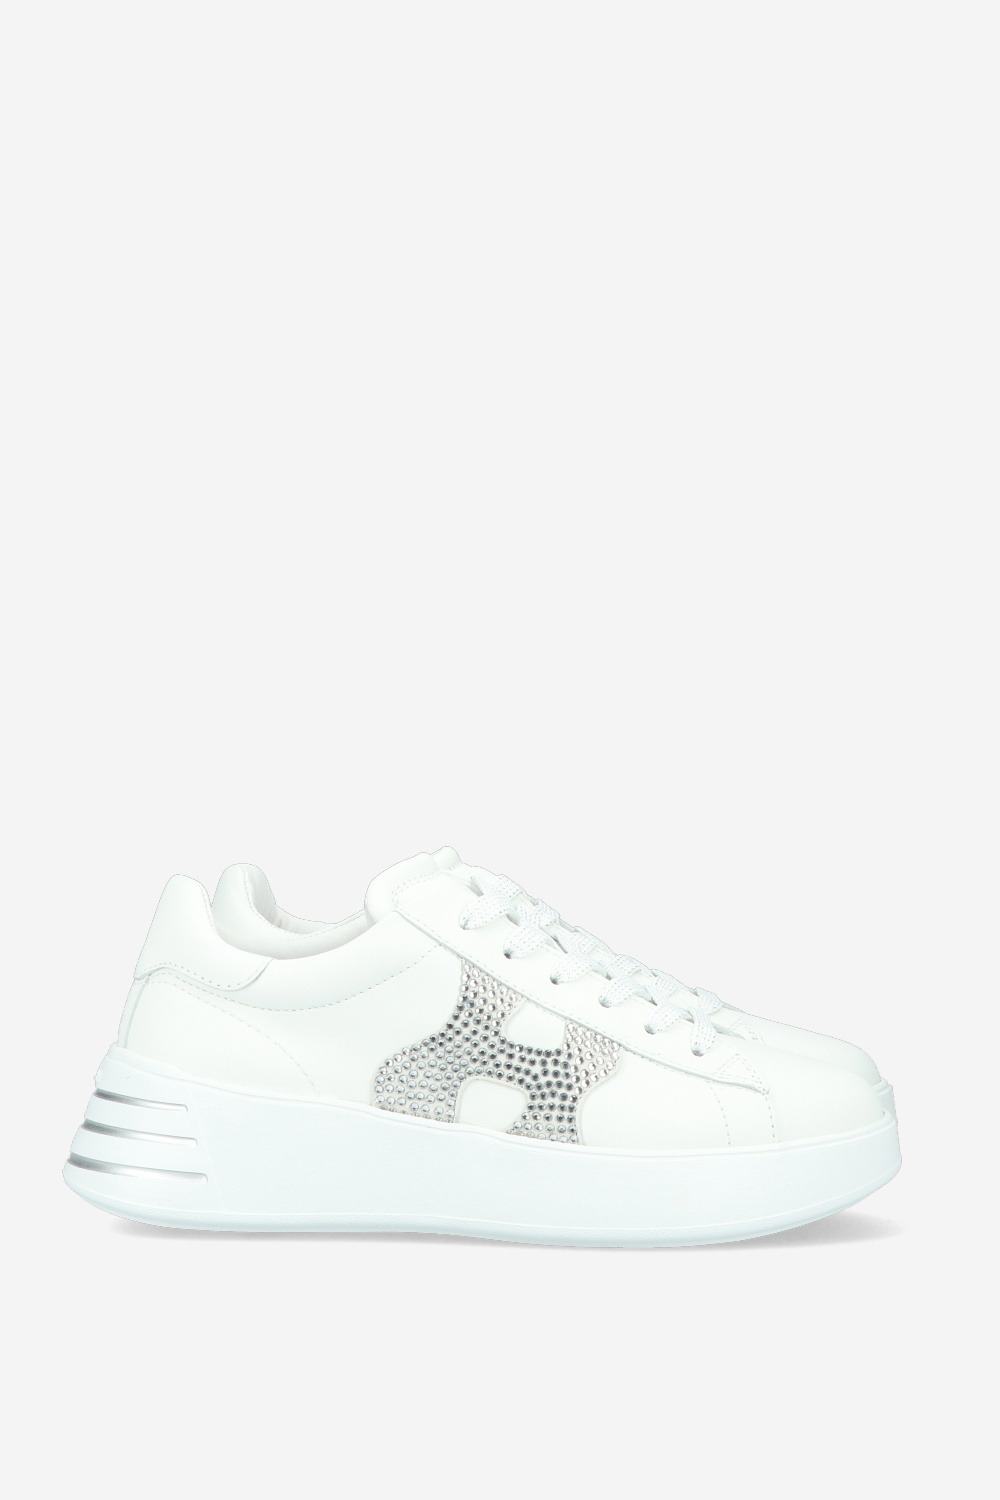 Hogan Sneakers White